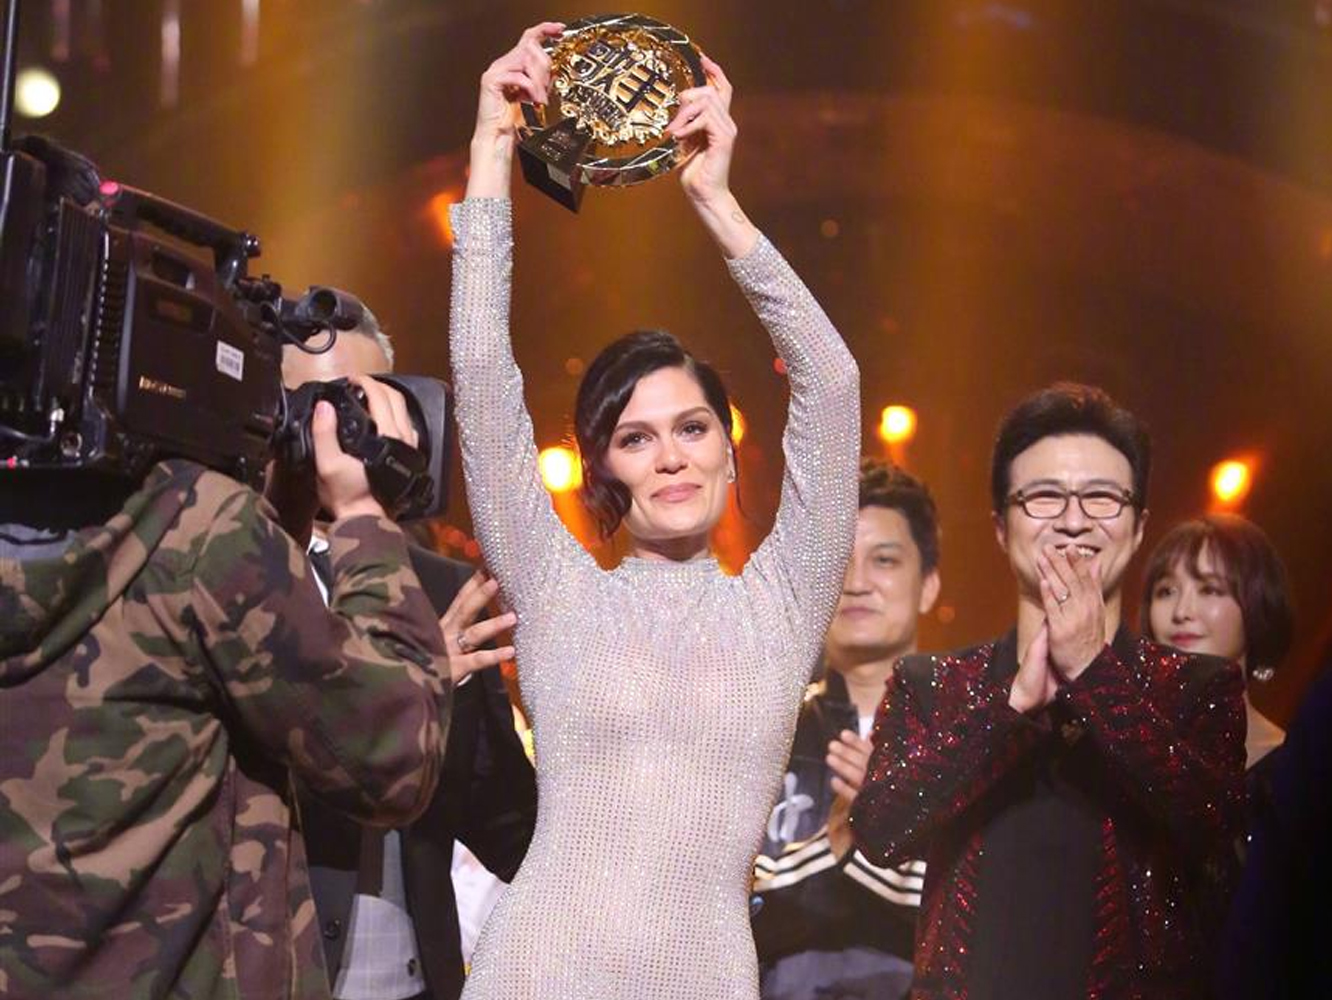  Previsible: Jessie J gana el talent show ‘Singer’ al volver a cantar por Whitney Houston